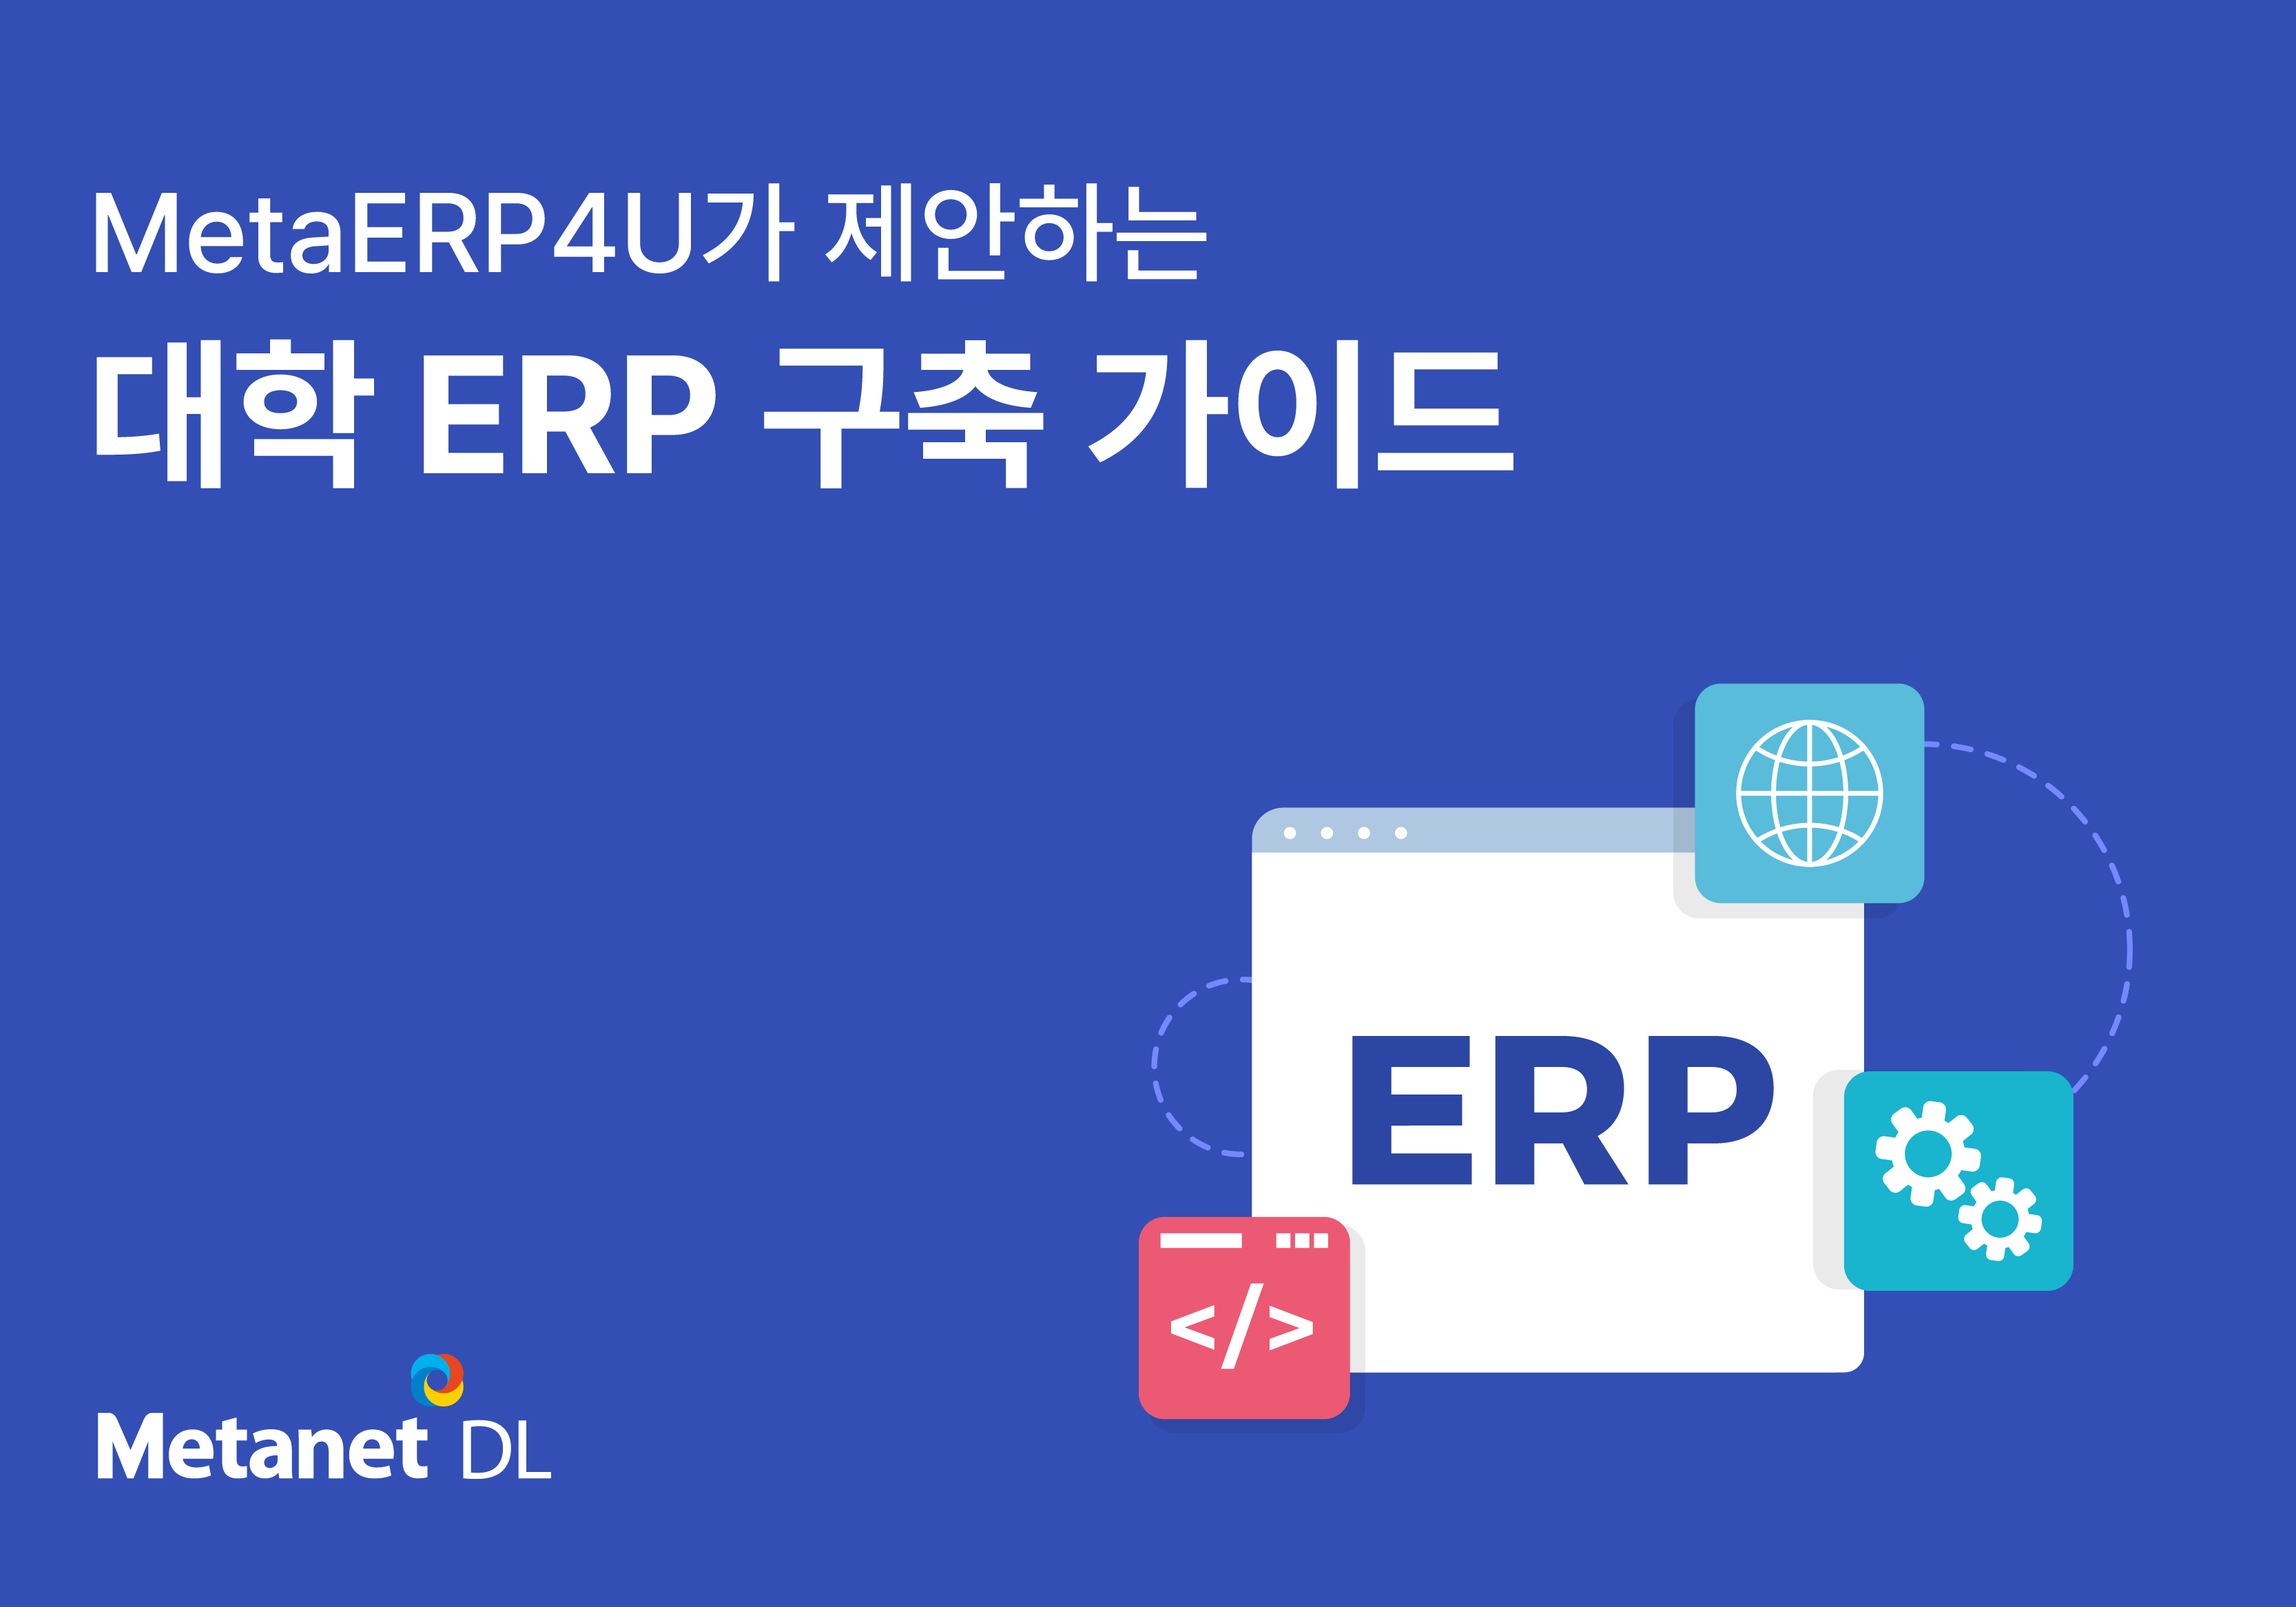 MetaERP4U가 제안하는 대학 ERP 구축 가이드